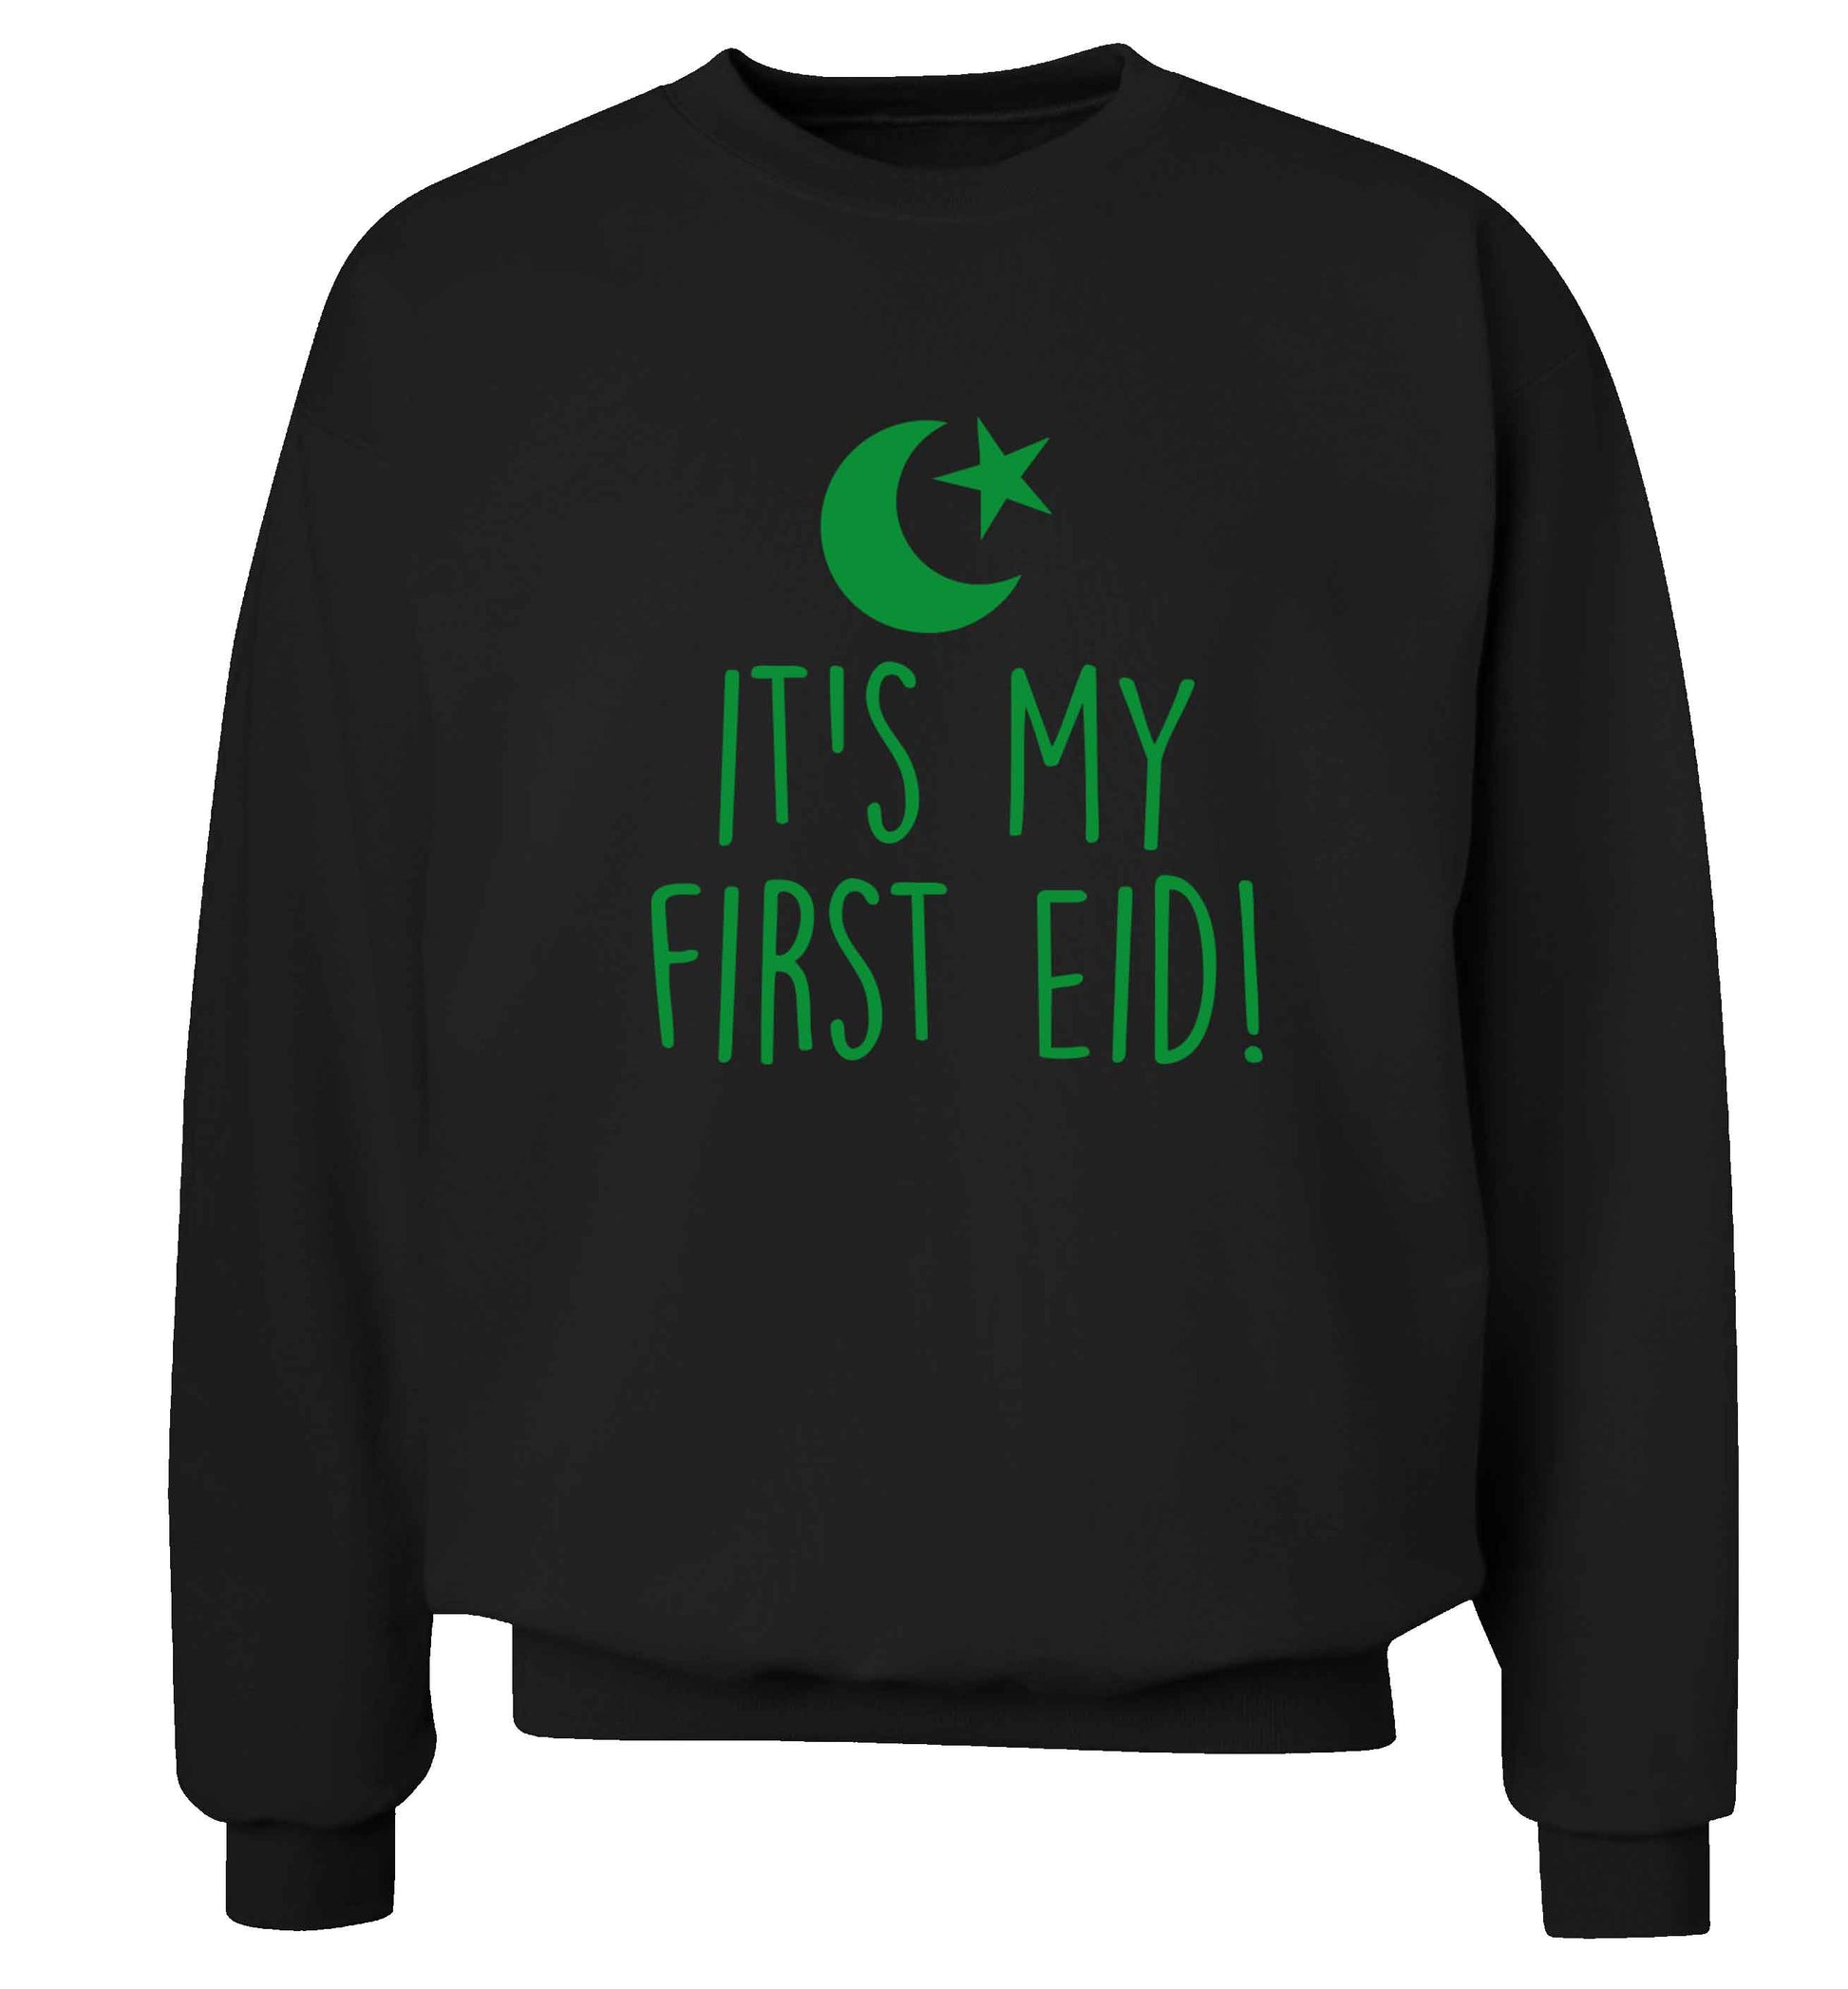 It's my first Eid adult's unisex black sweater 2XL